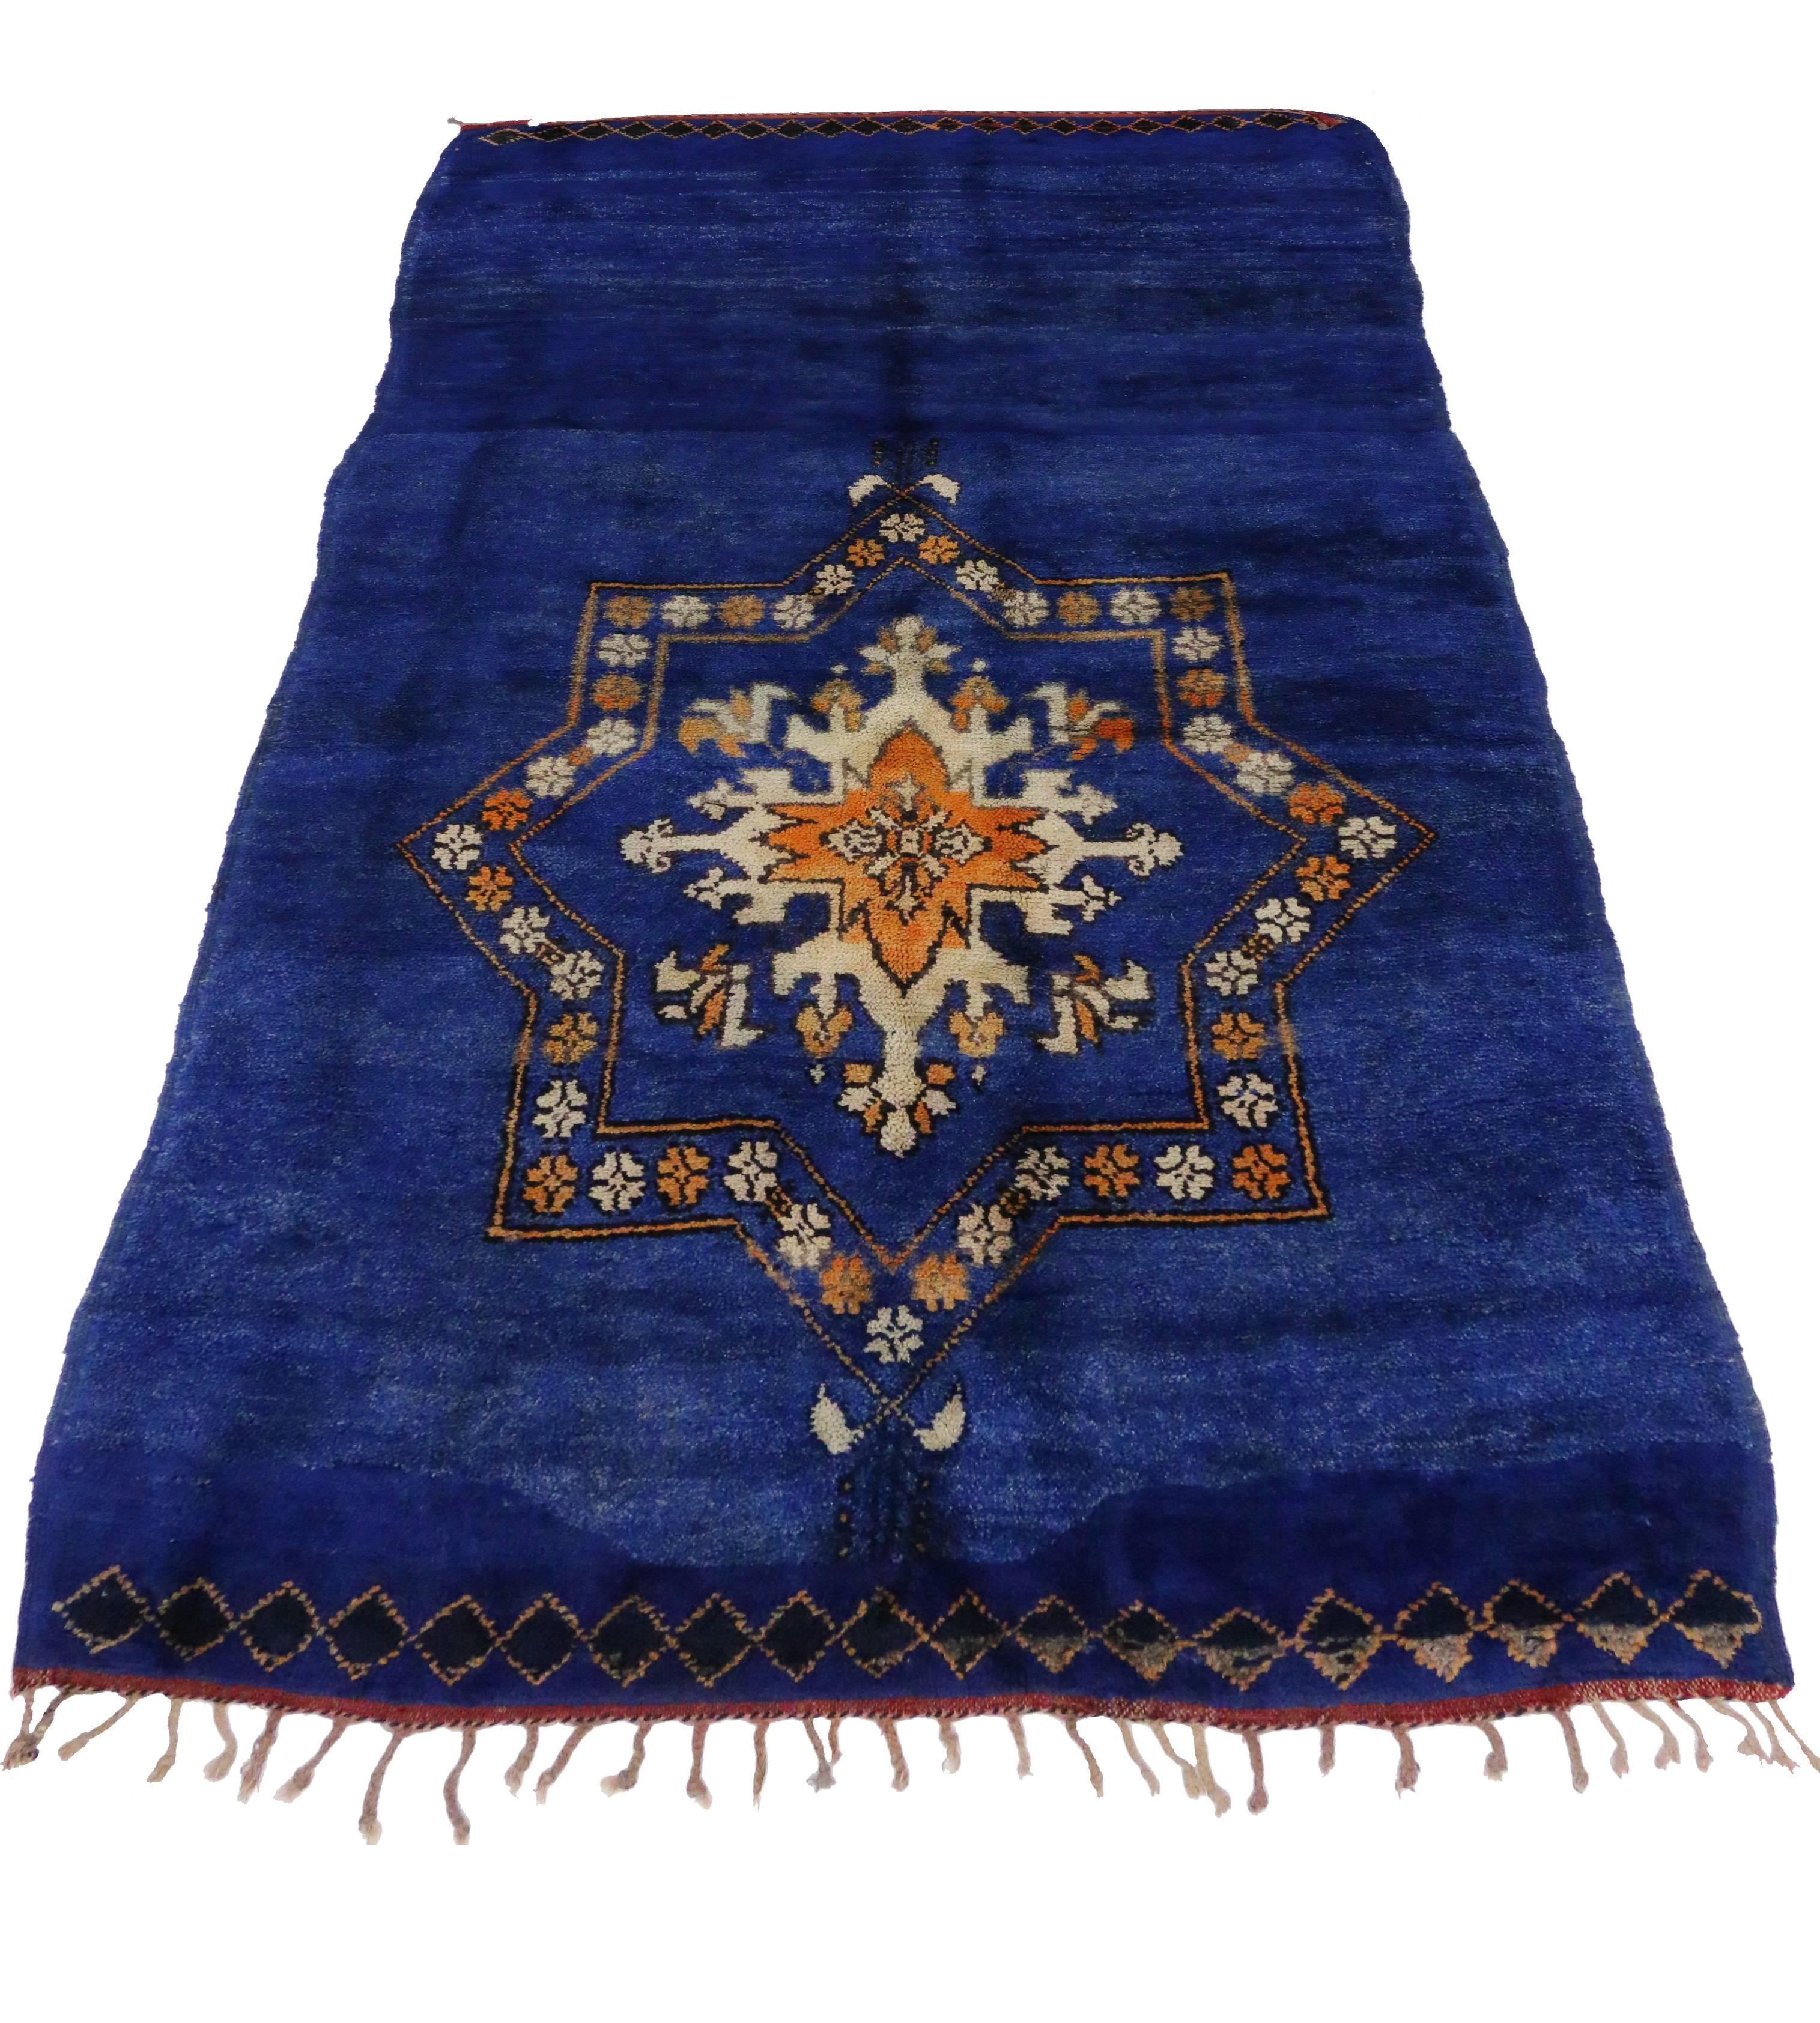 Hand-Knotted Vintage Berber Moroccan Rug in Cobalt Blue with Modern Tribal Design